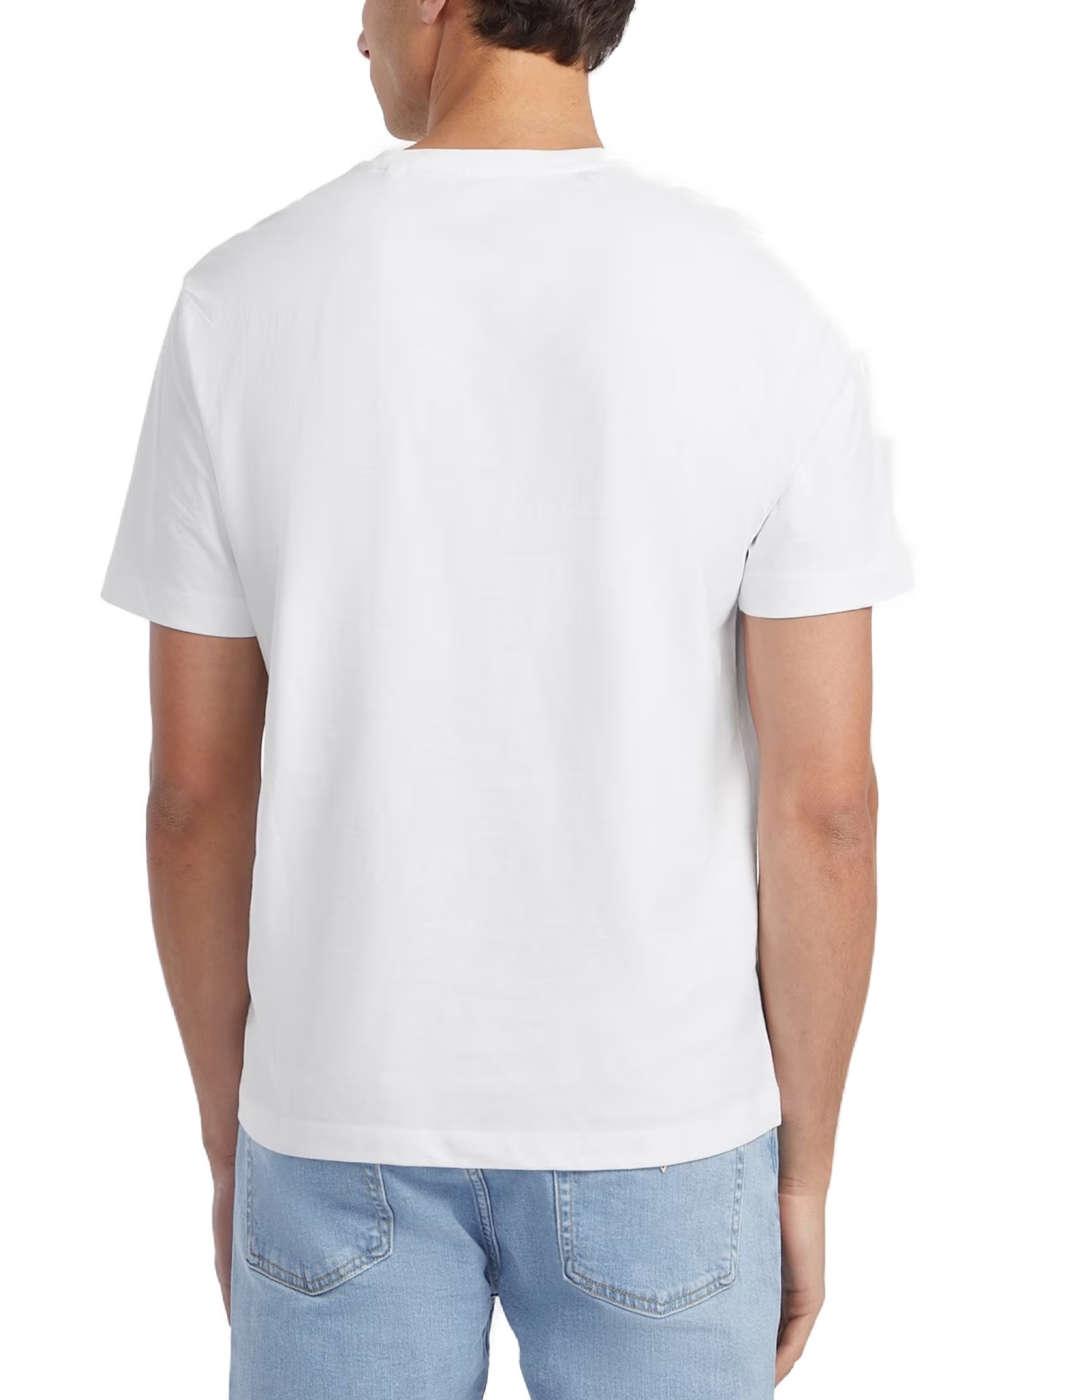 Camiseta Guess Jeans Logo blanca manga corta para hombre